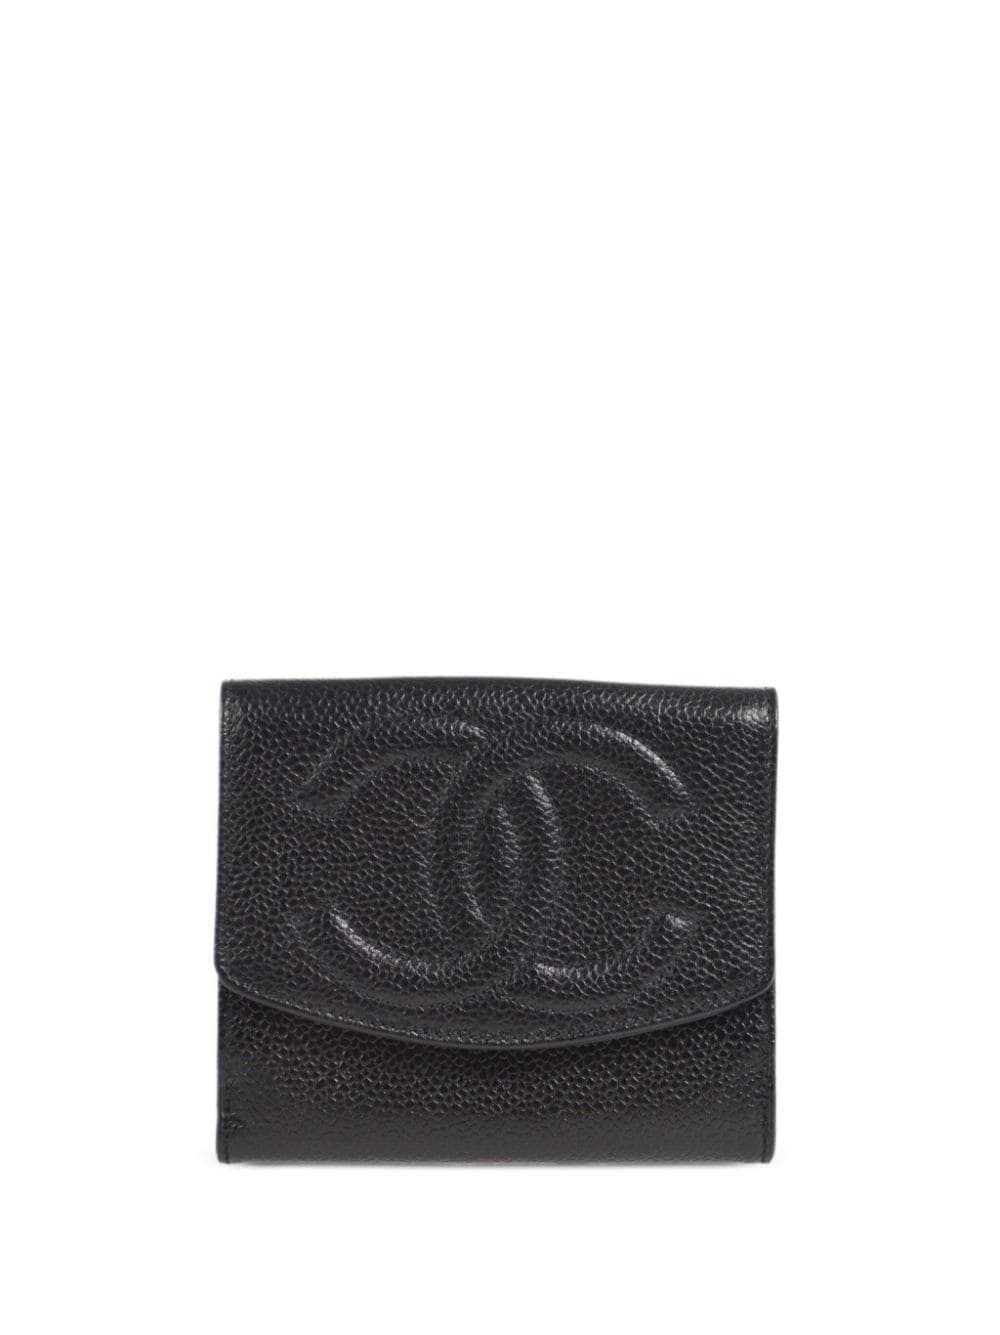 Chanel Pre-Owned CC elongated bi-fold wallet